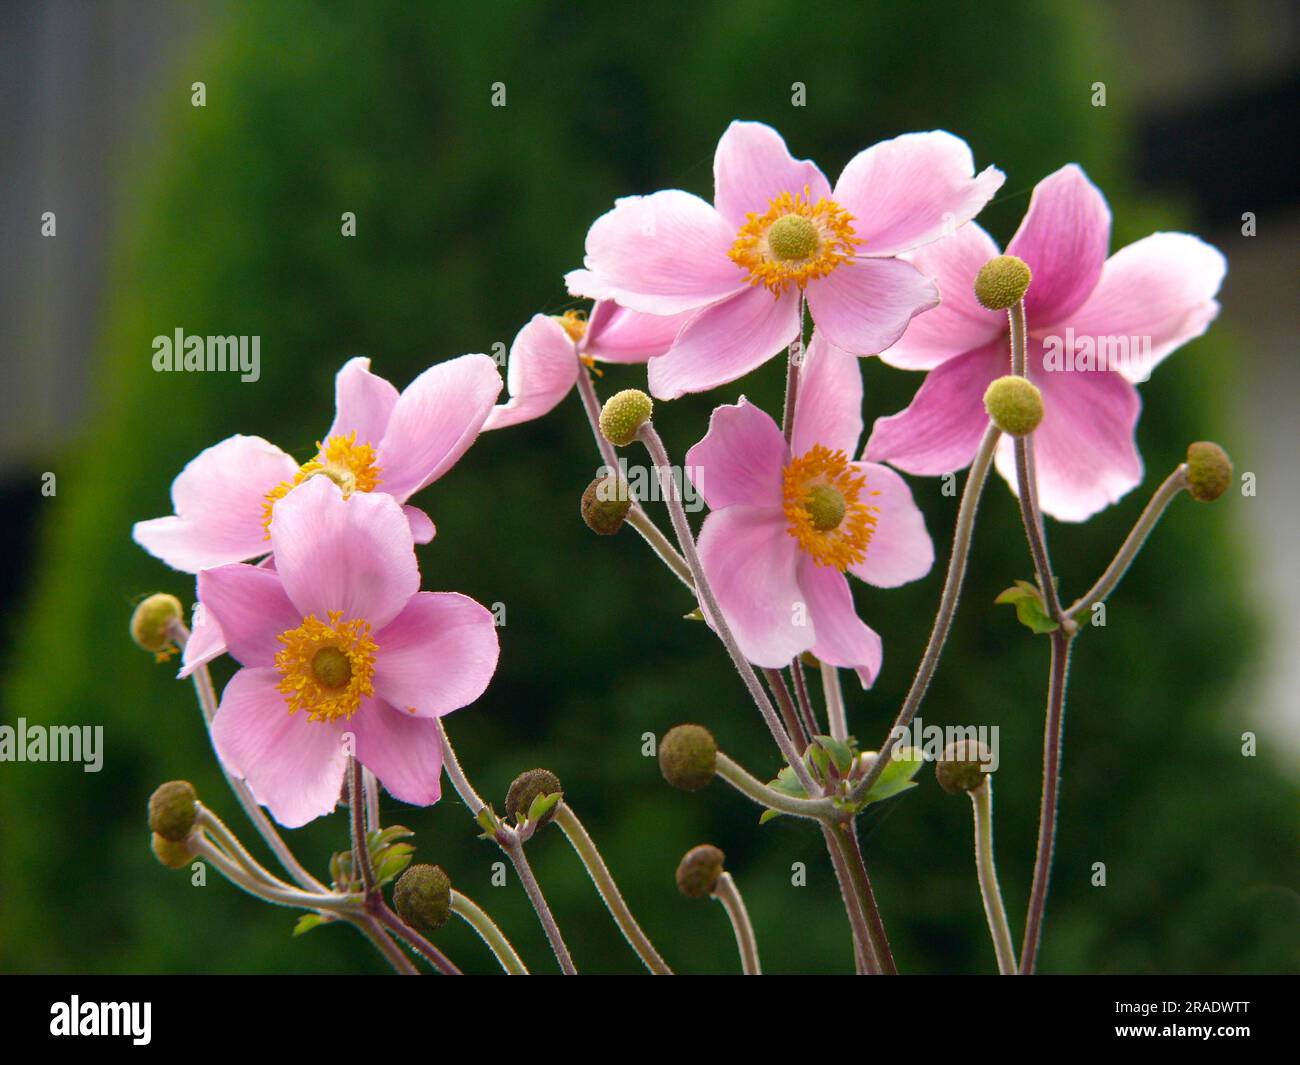 Japanese anemone flowering in the garden, Anemone x lesseri Stock Photo